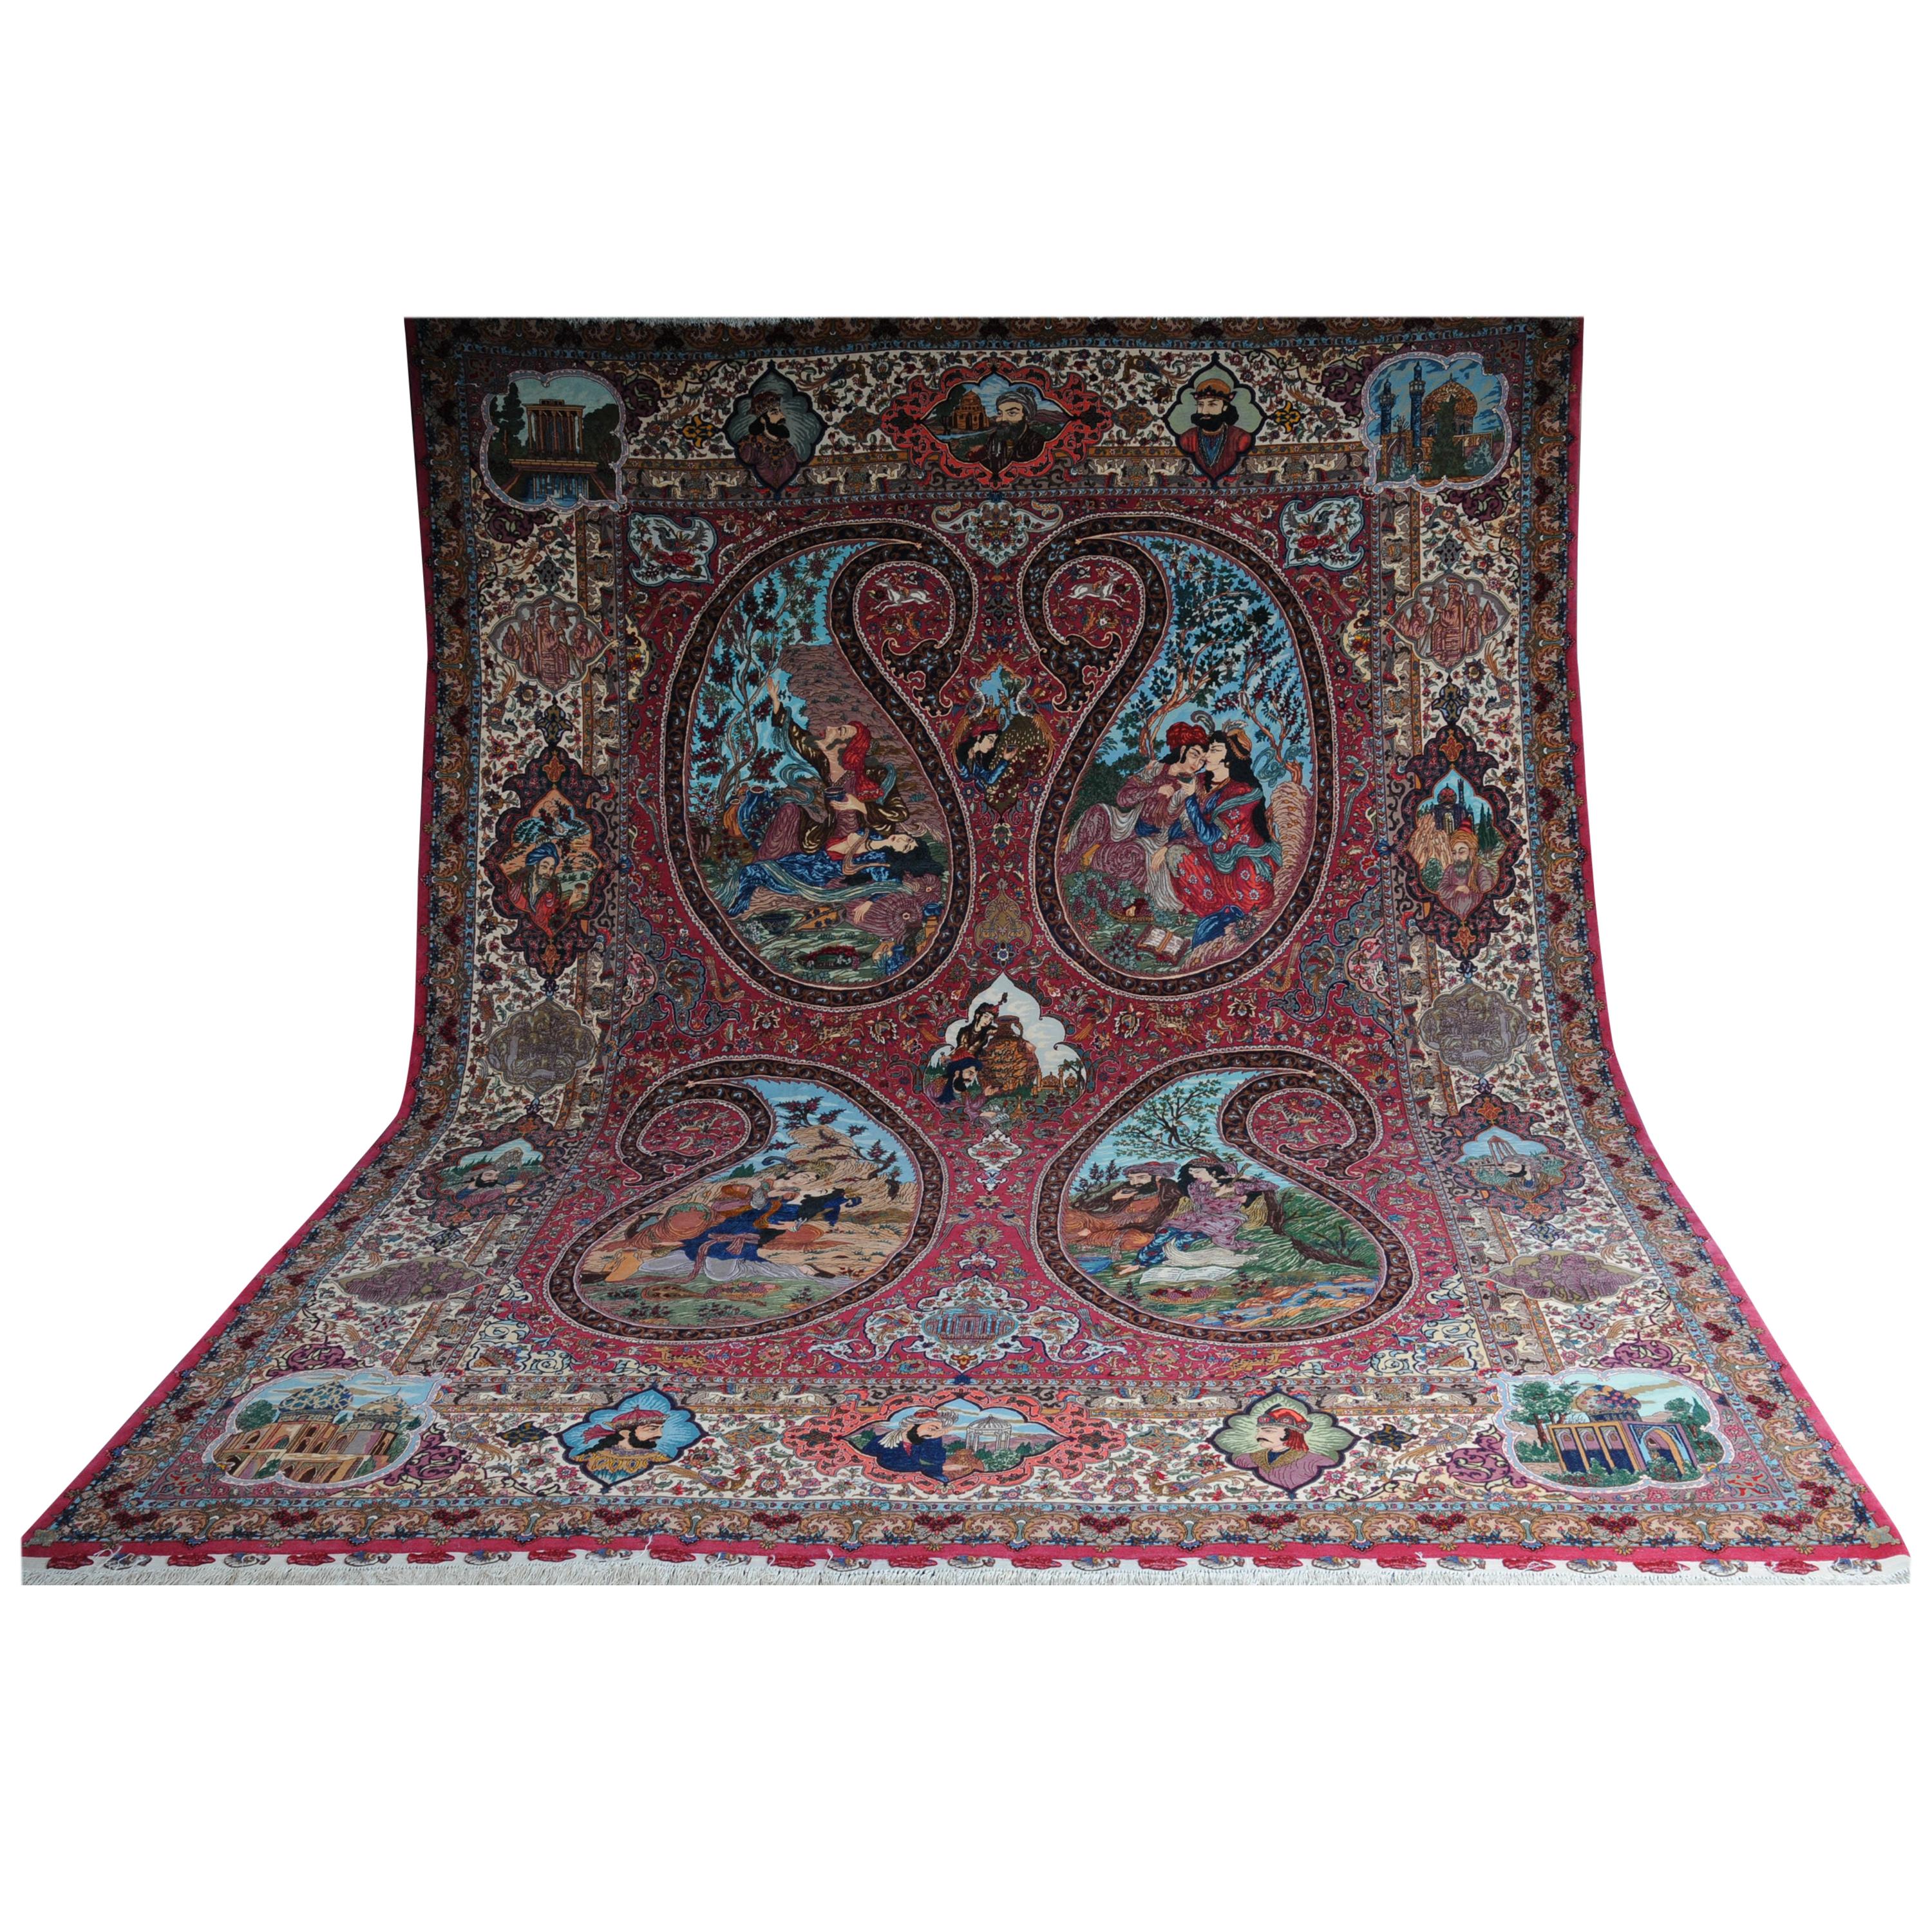 Original Persian Palace Carpet Tabriz Cork Wool with Silk